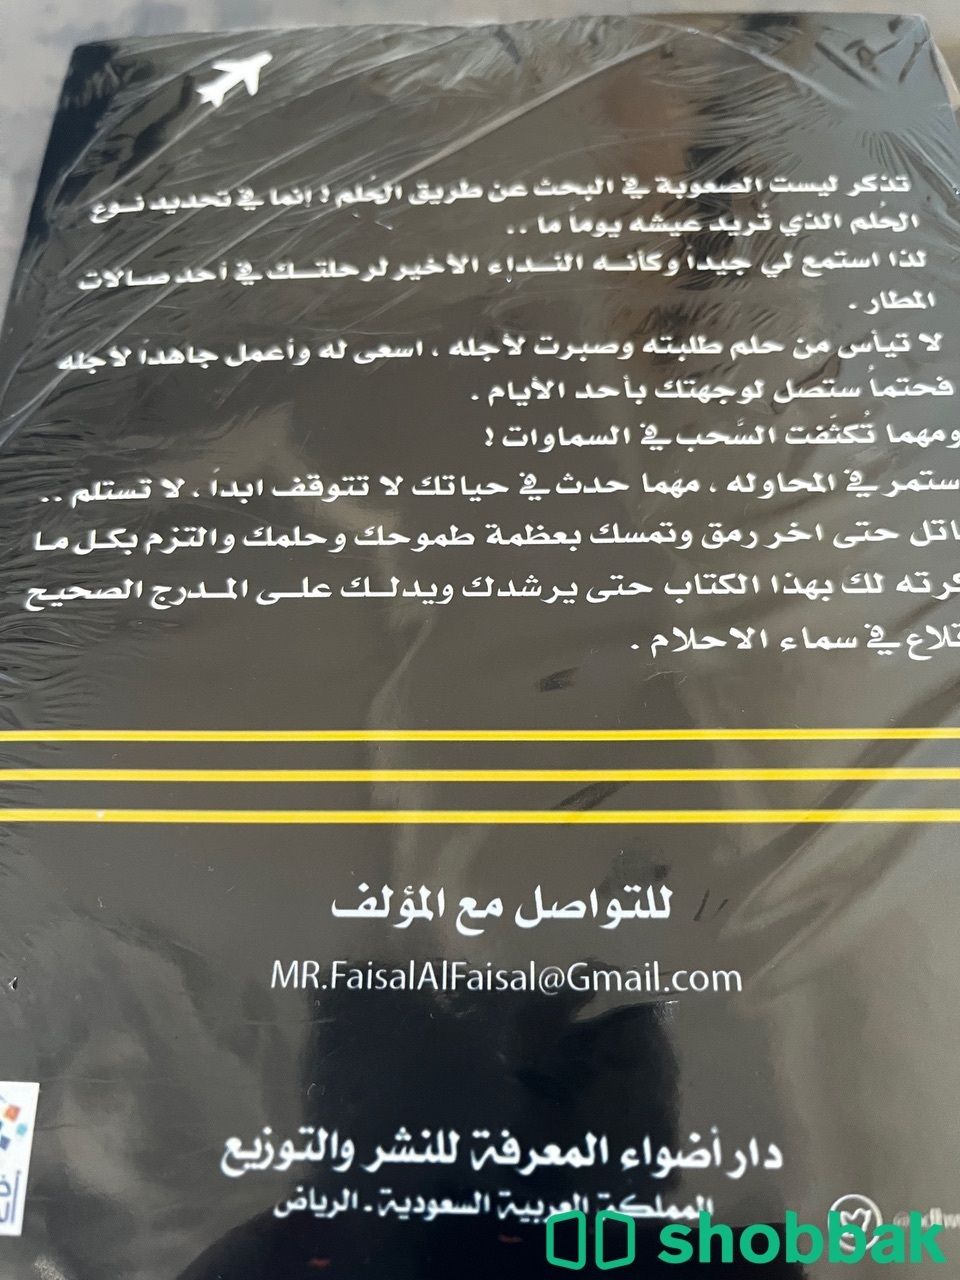 كتاب عن روايه مشوقه وجميله جدا Shobbak Saudi Arabia